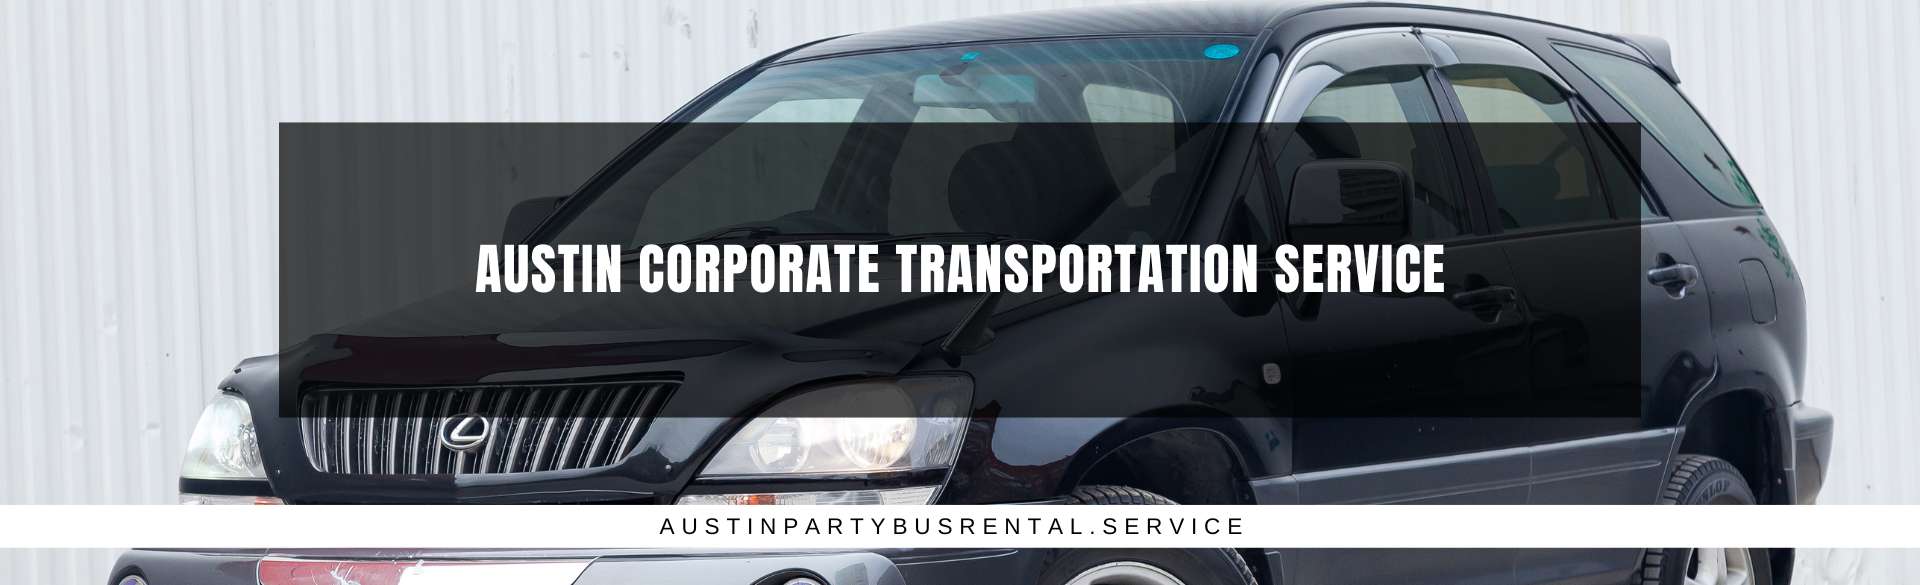 Austin Corporate Transportation Service